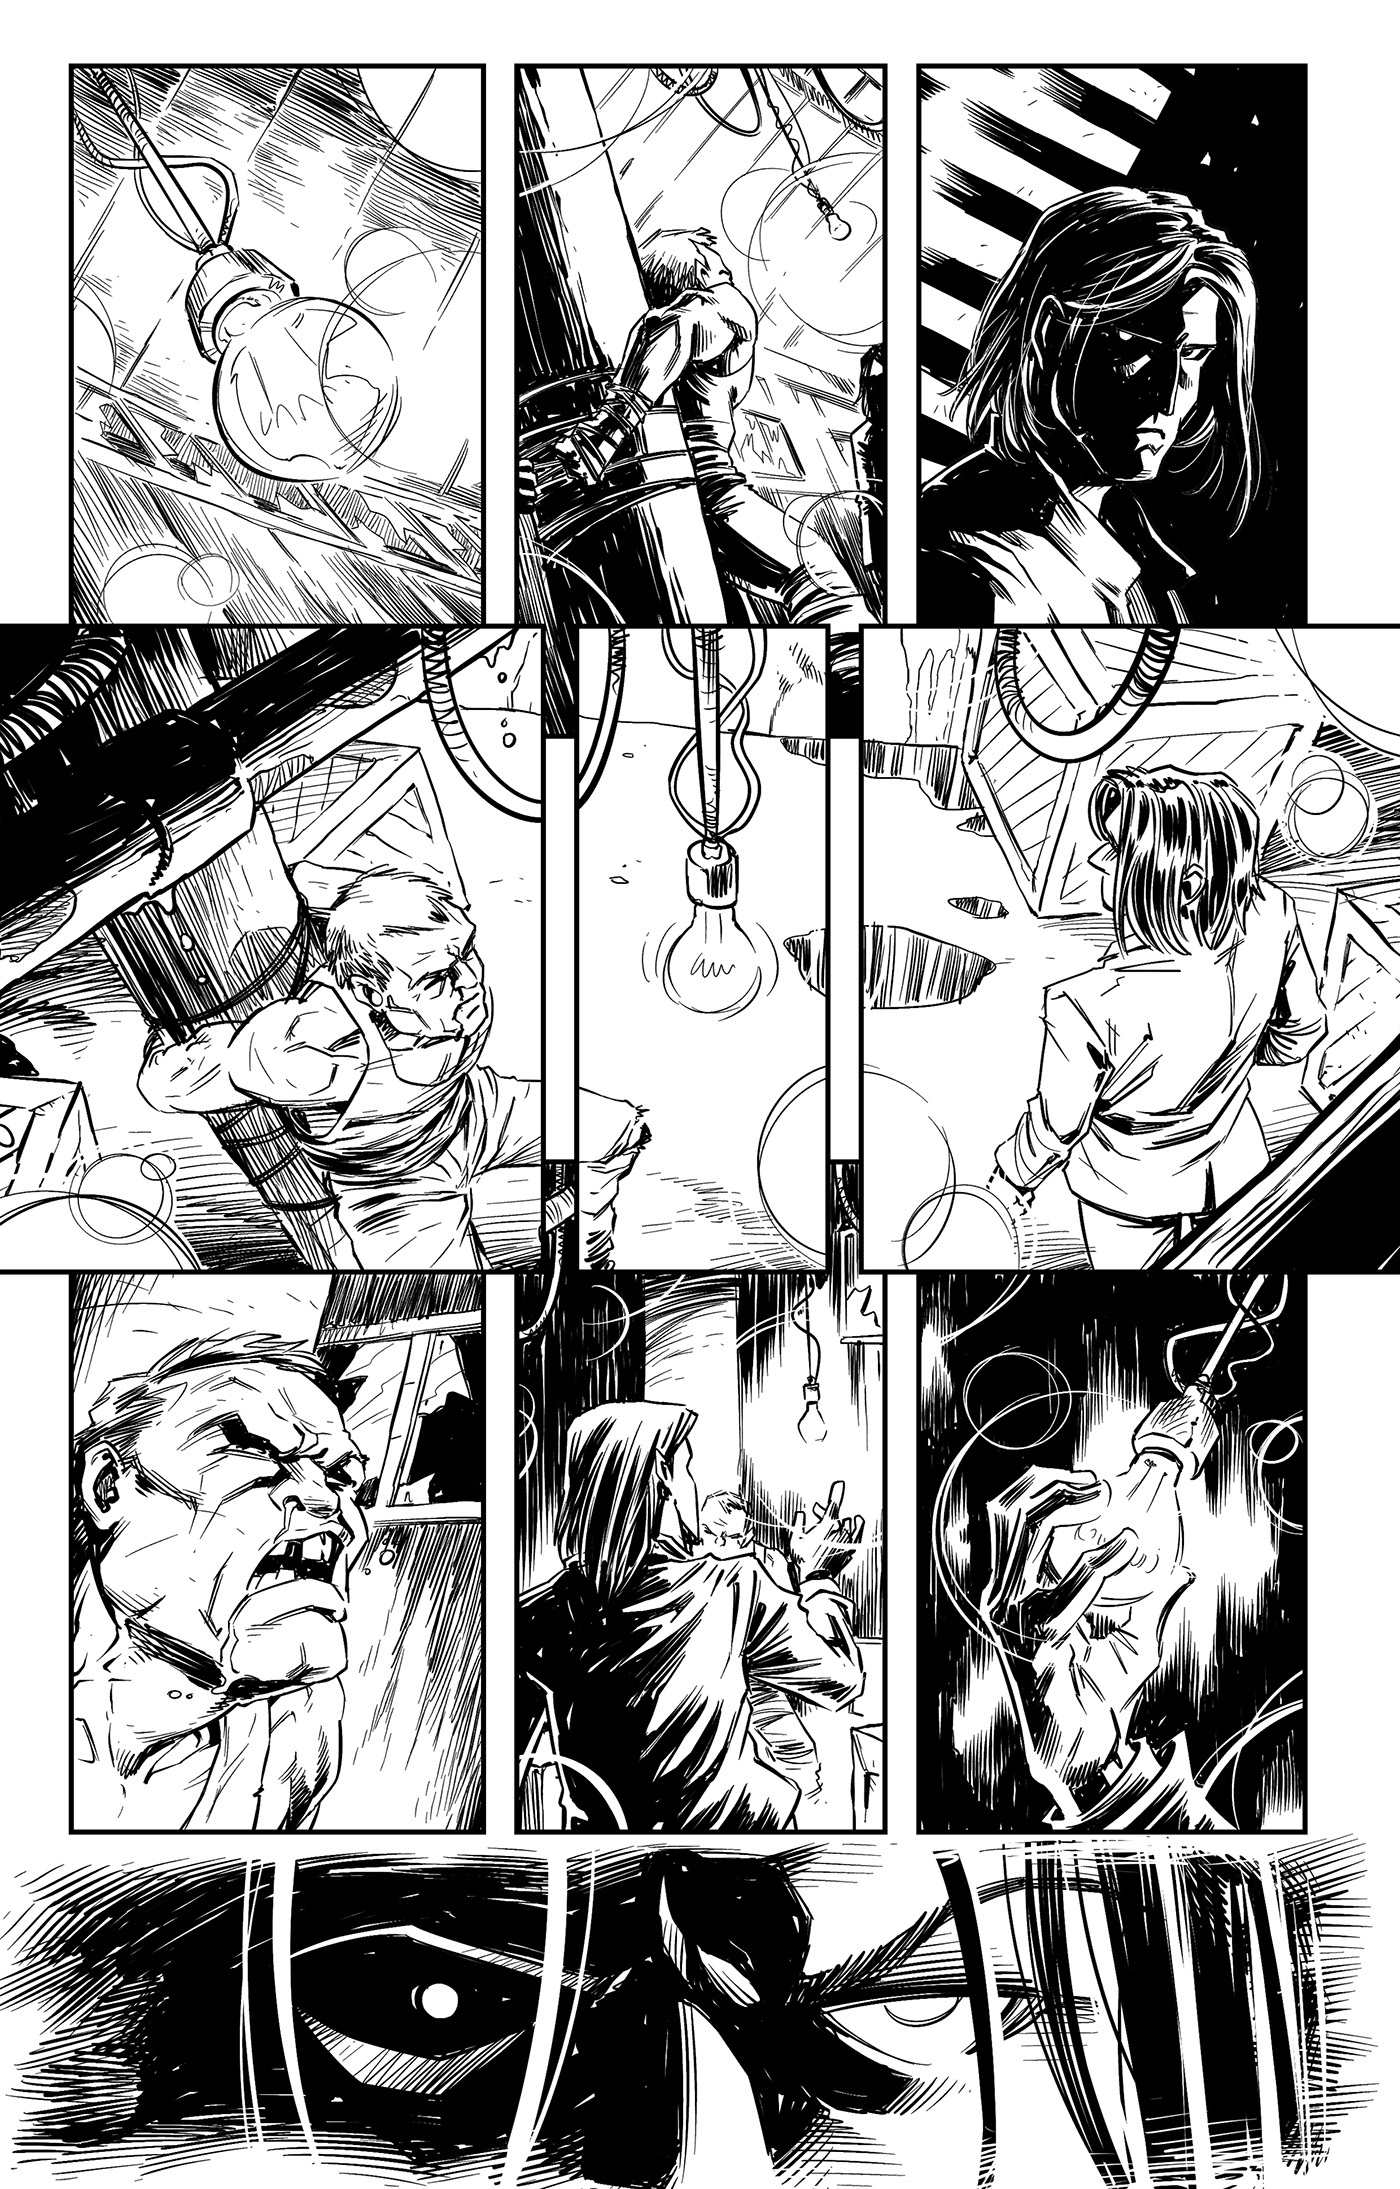 comic books comics Graphic Novel hq inker narrative page layout quadrinhos storytelling  